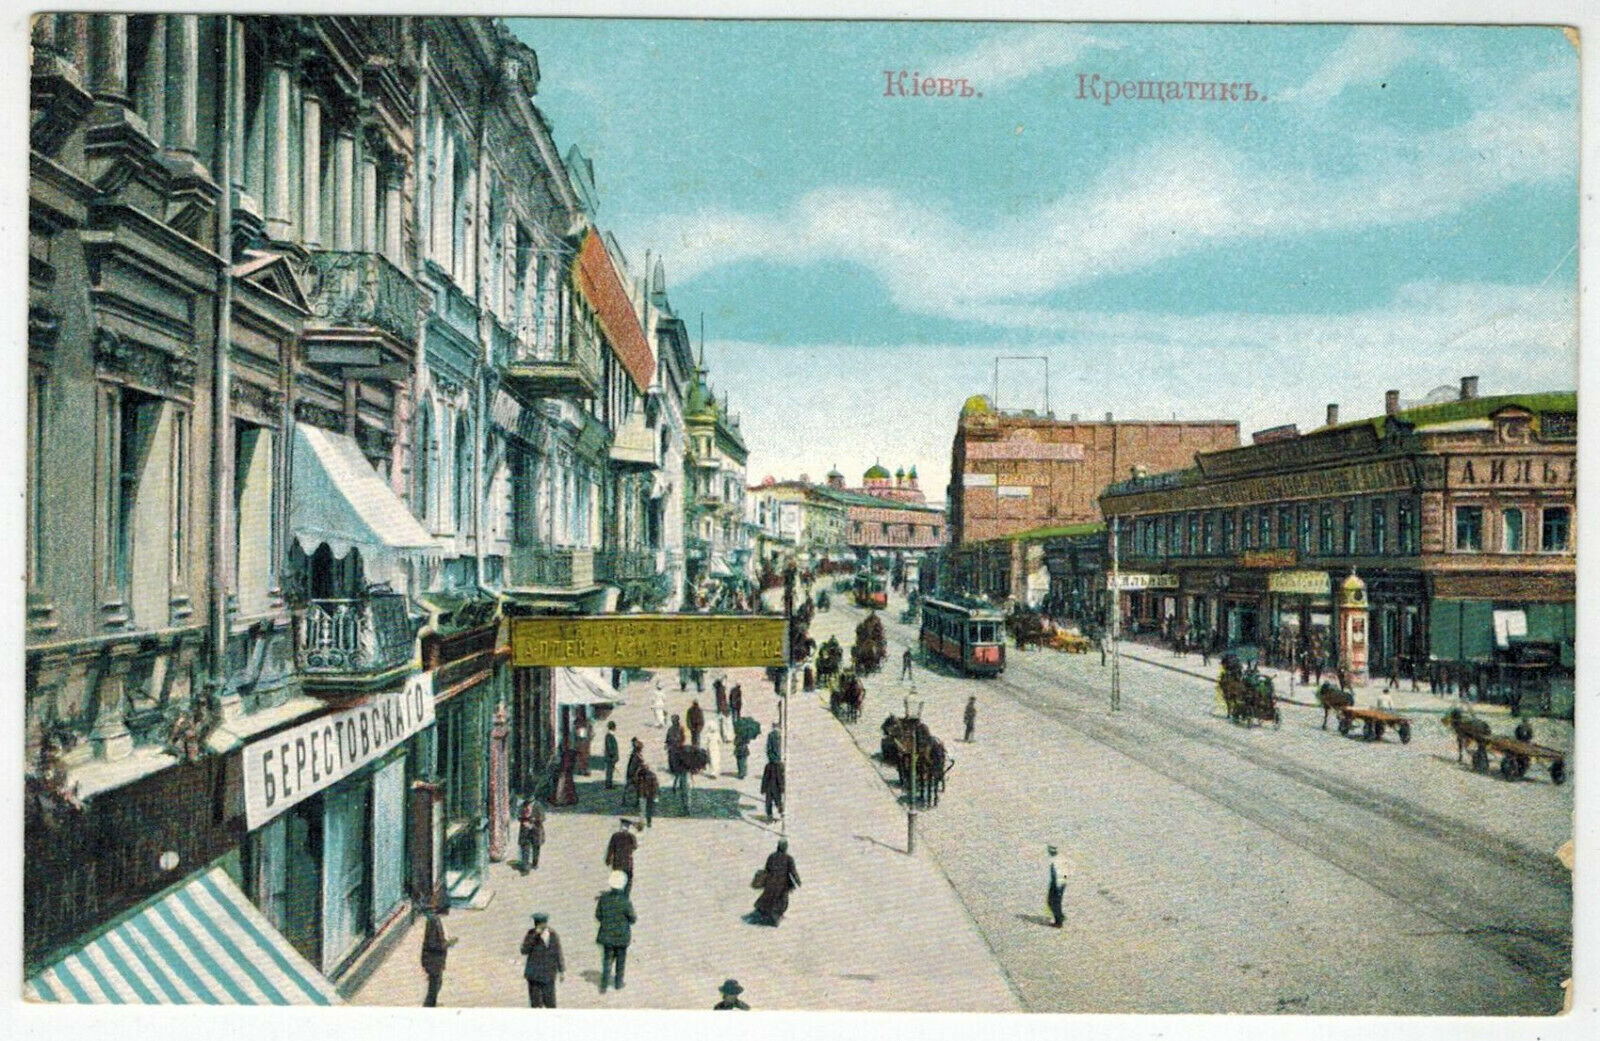 View to the Stores, Kreshtshatik, Kiew, Ukraine, 1910s, Rare!